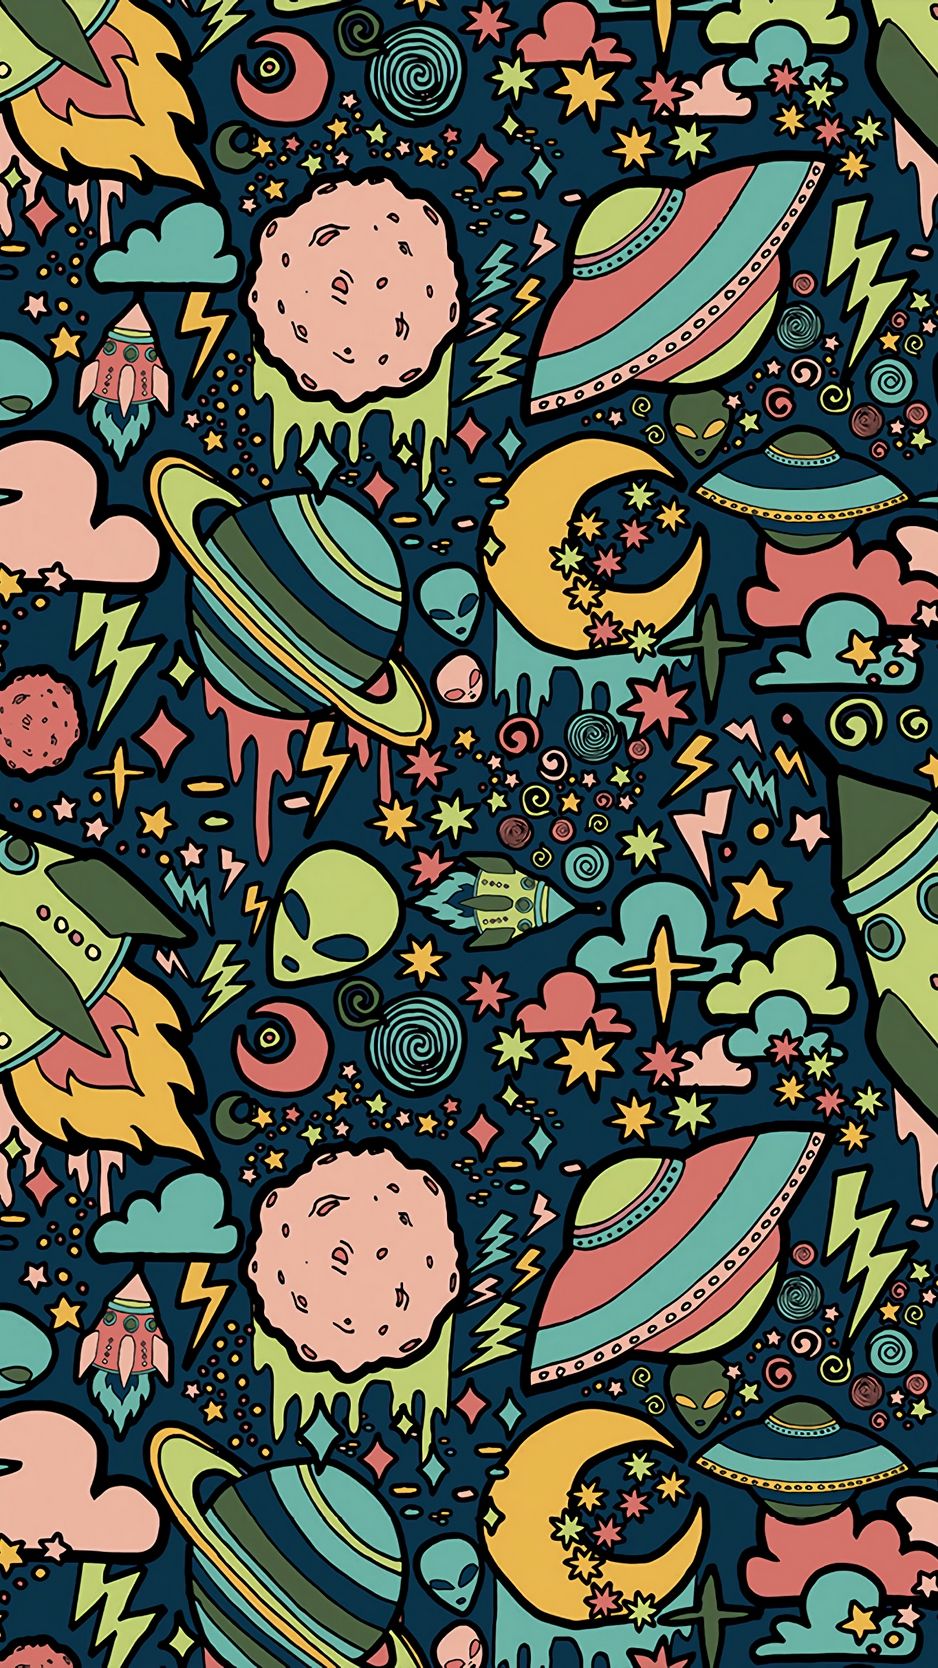 Texture, patterns, aliens, rockets, space wallpaper